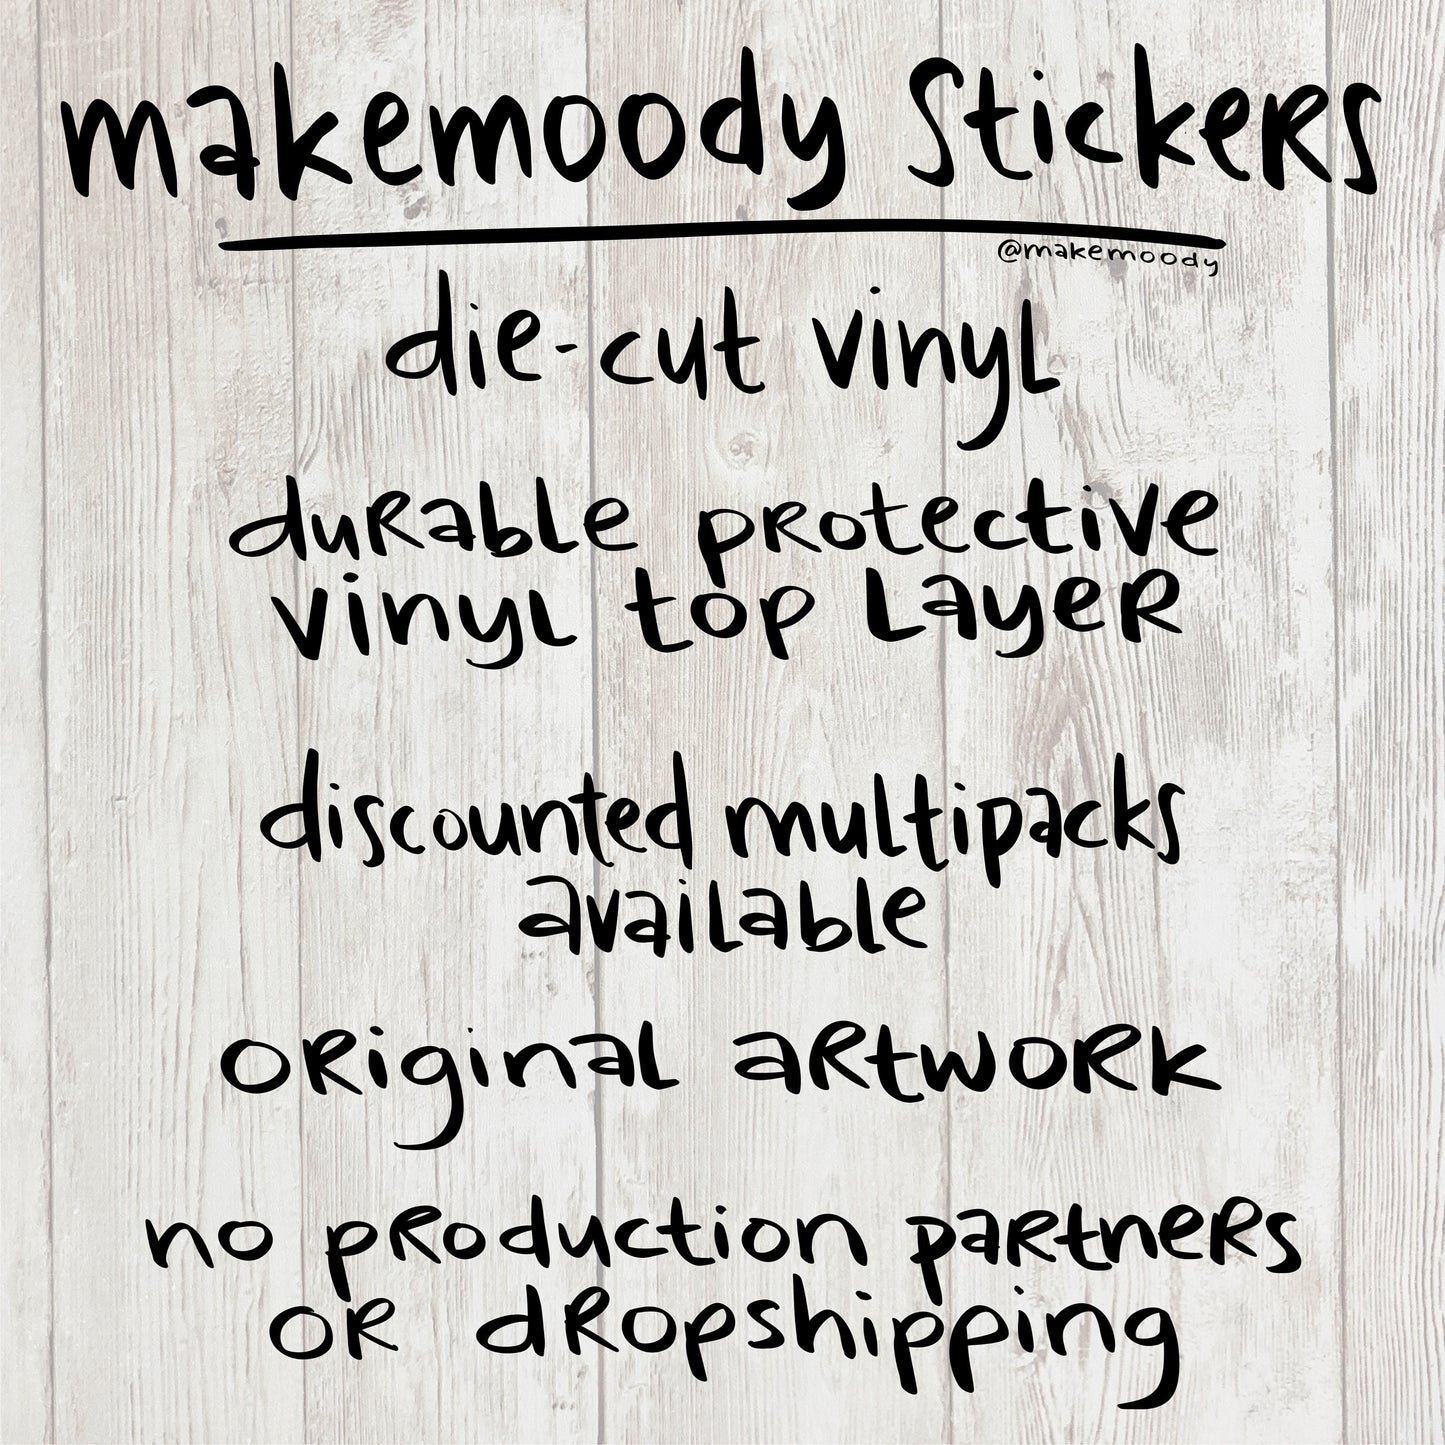 Only Murders in the Building STICKER - Vinyl Decal Sticker - OMITB Sticker, Steve Martin Sticker, Martin Short Sticker, Selena Gomez Sticker